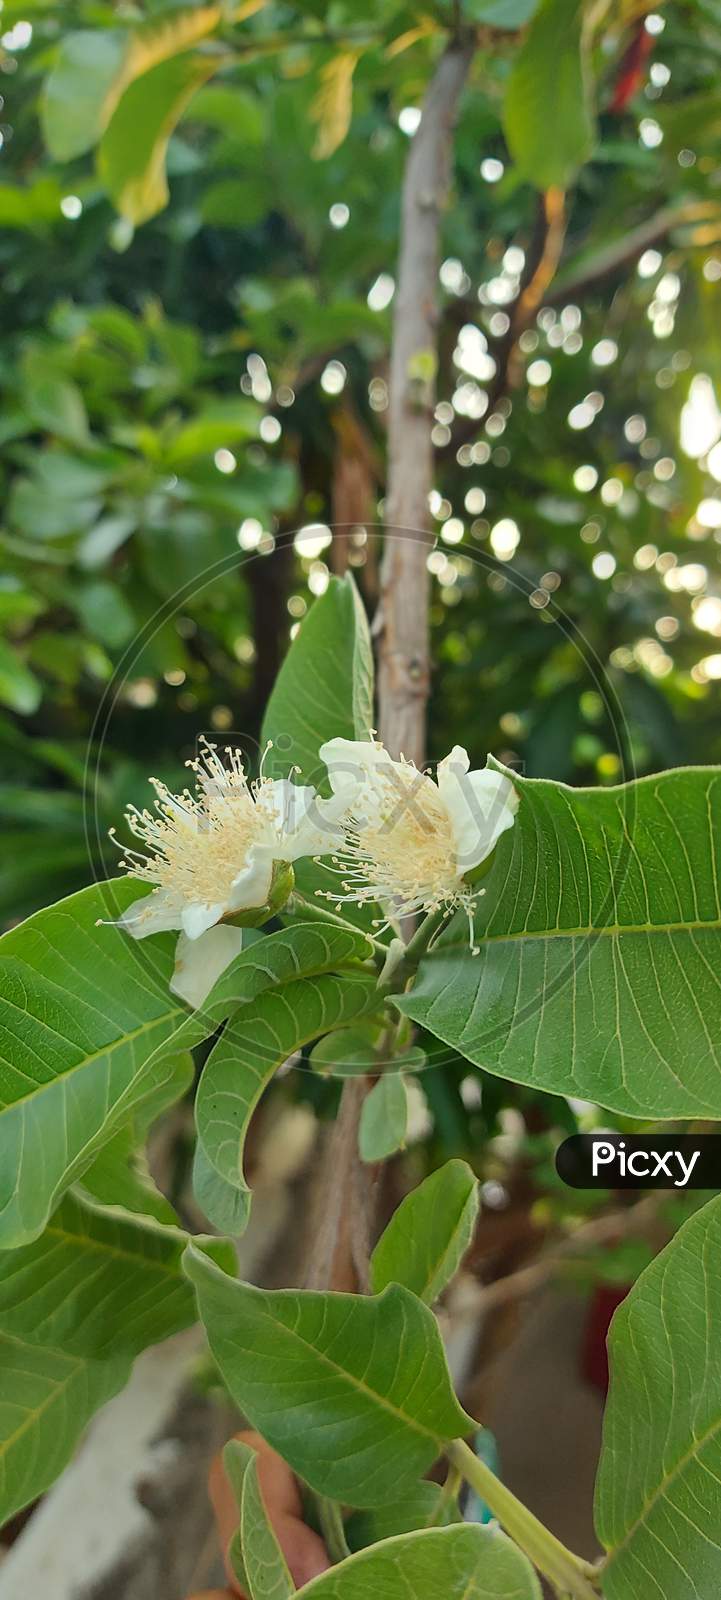 A beautiful guava flower